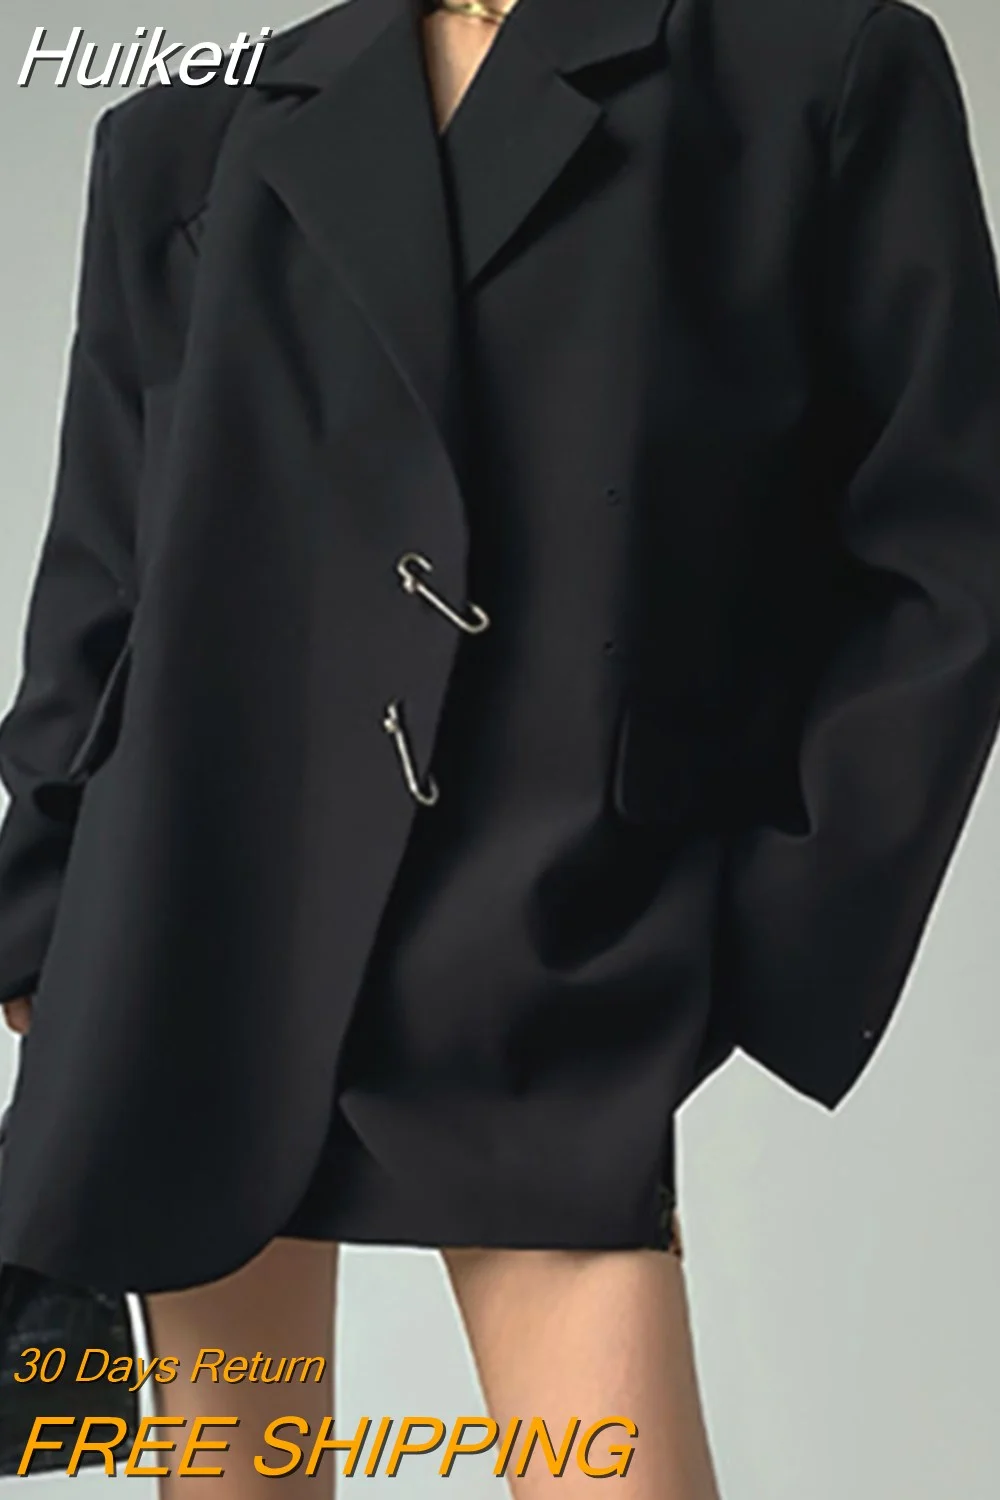 Huiketi Black Loose Brooch Button Simplicity Casual Temperament Autumn New All-match Suit Coat Fashion Women Blazer 5W321